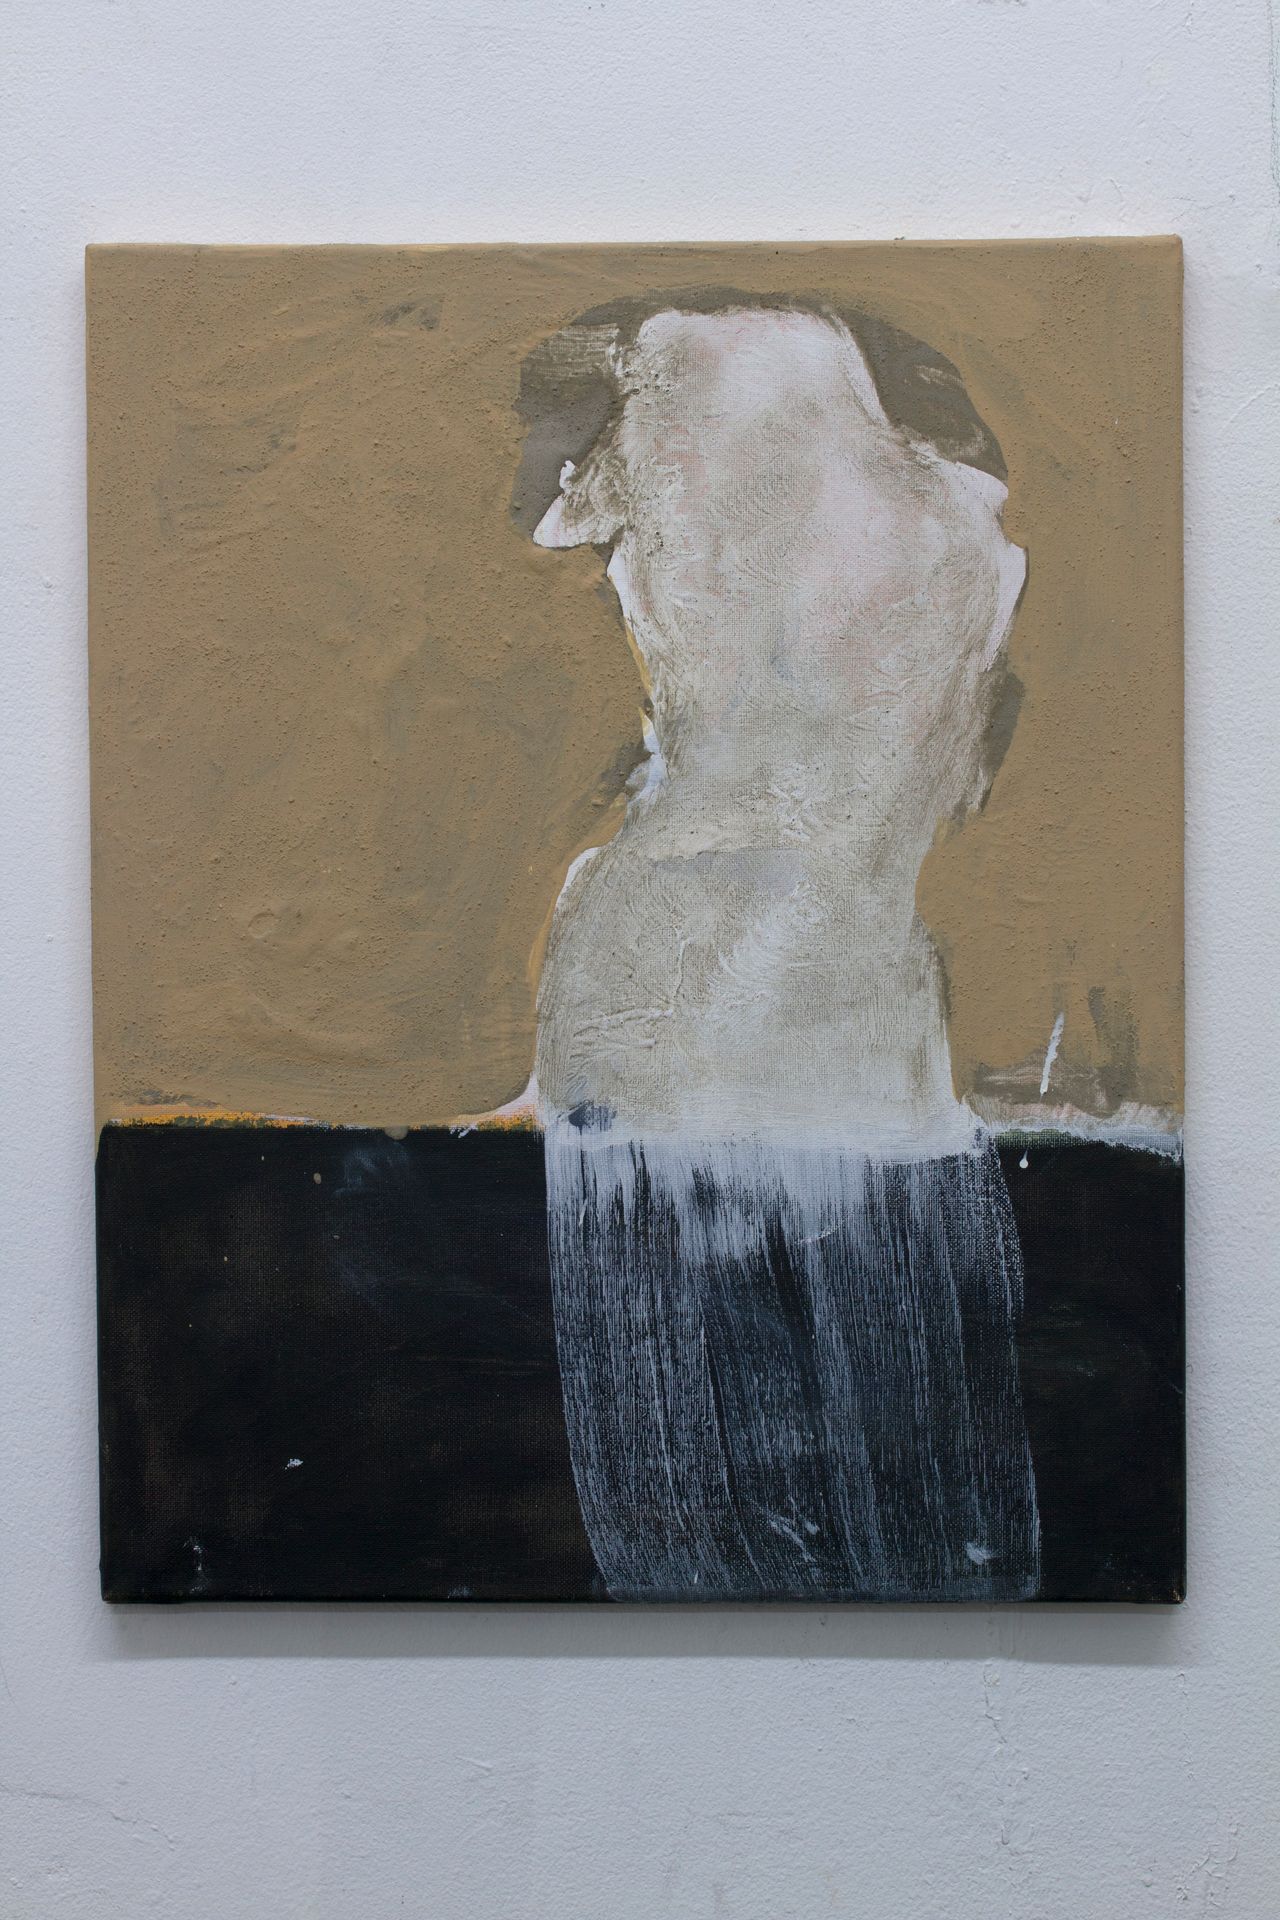 Kamran Taherimoghaddam. "La Statua Perduta" (2013), acrylic on canvas, 20”x16”.